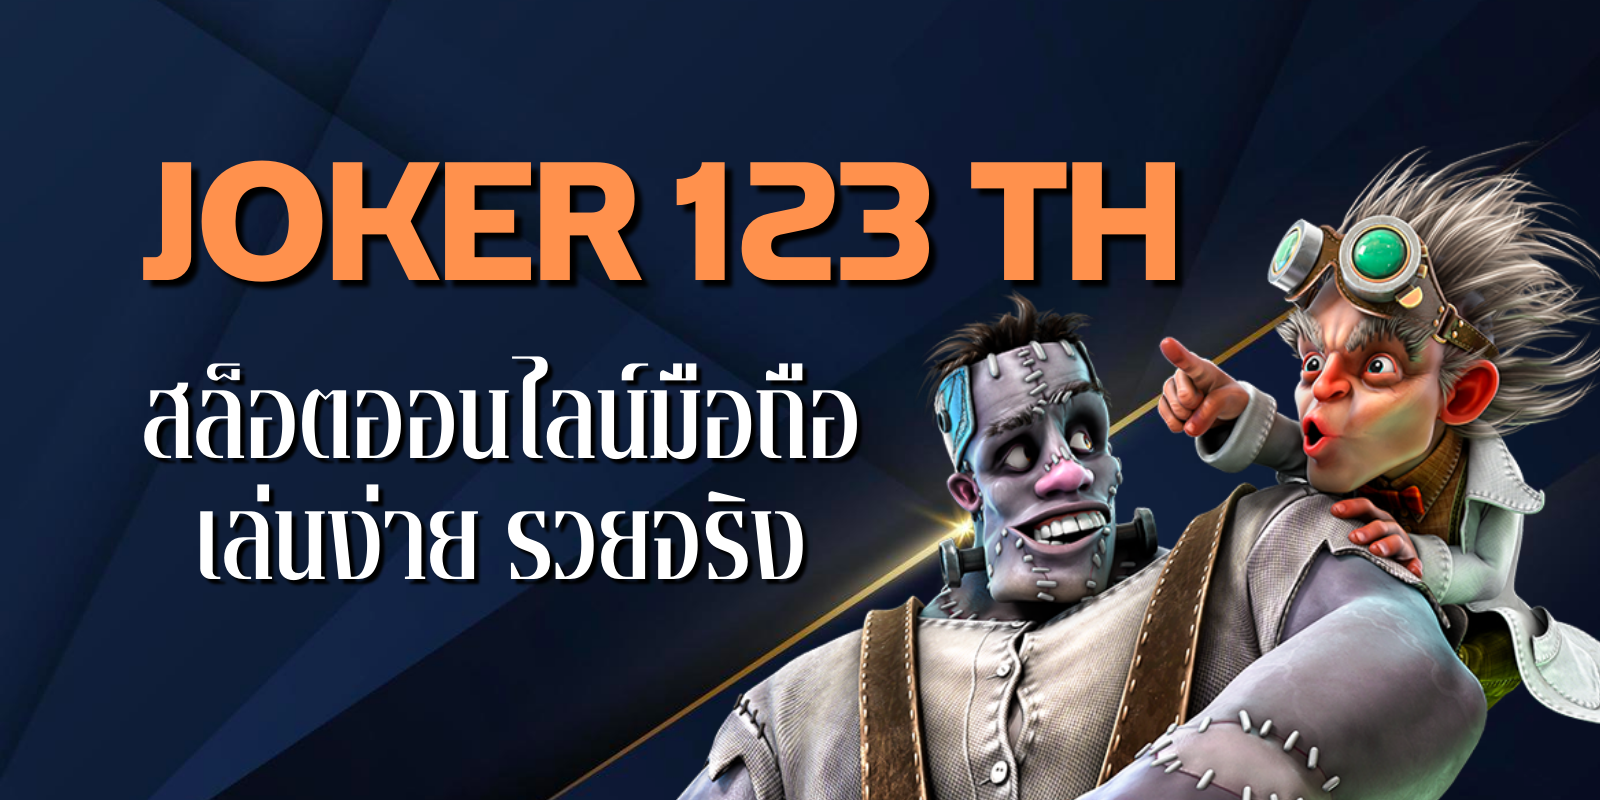 joker 123 th